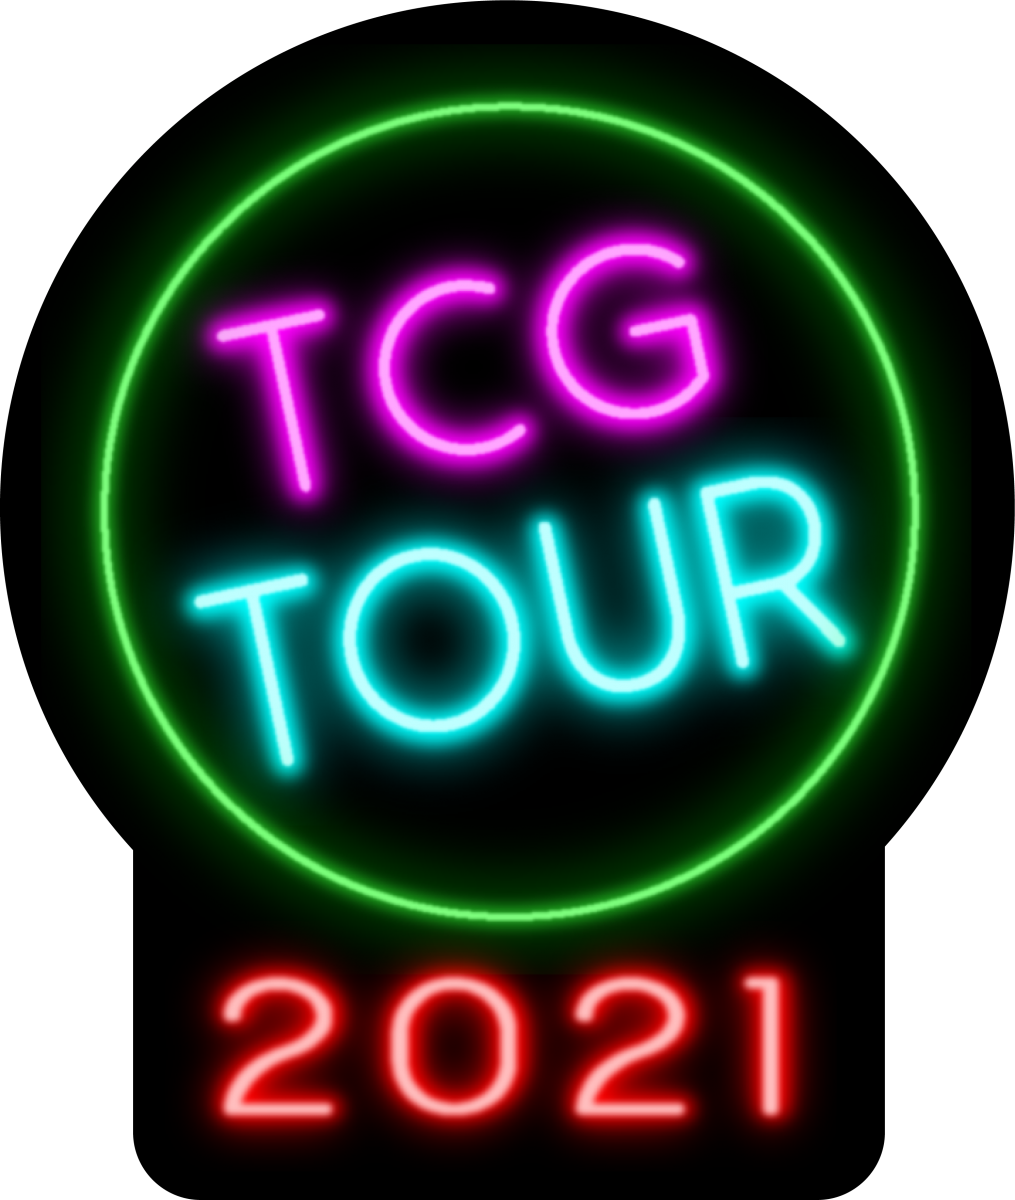 TCG Tour Sticker.png